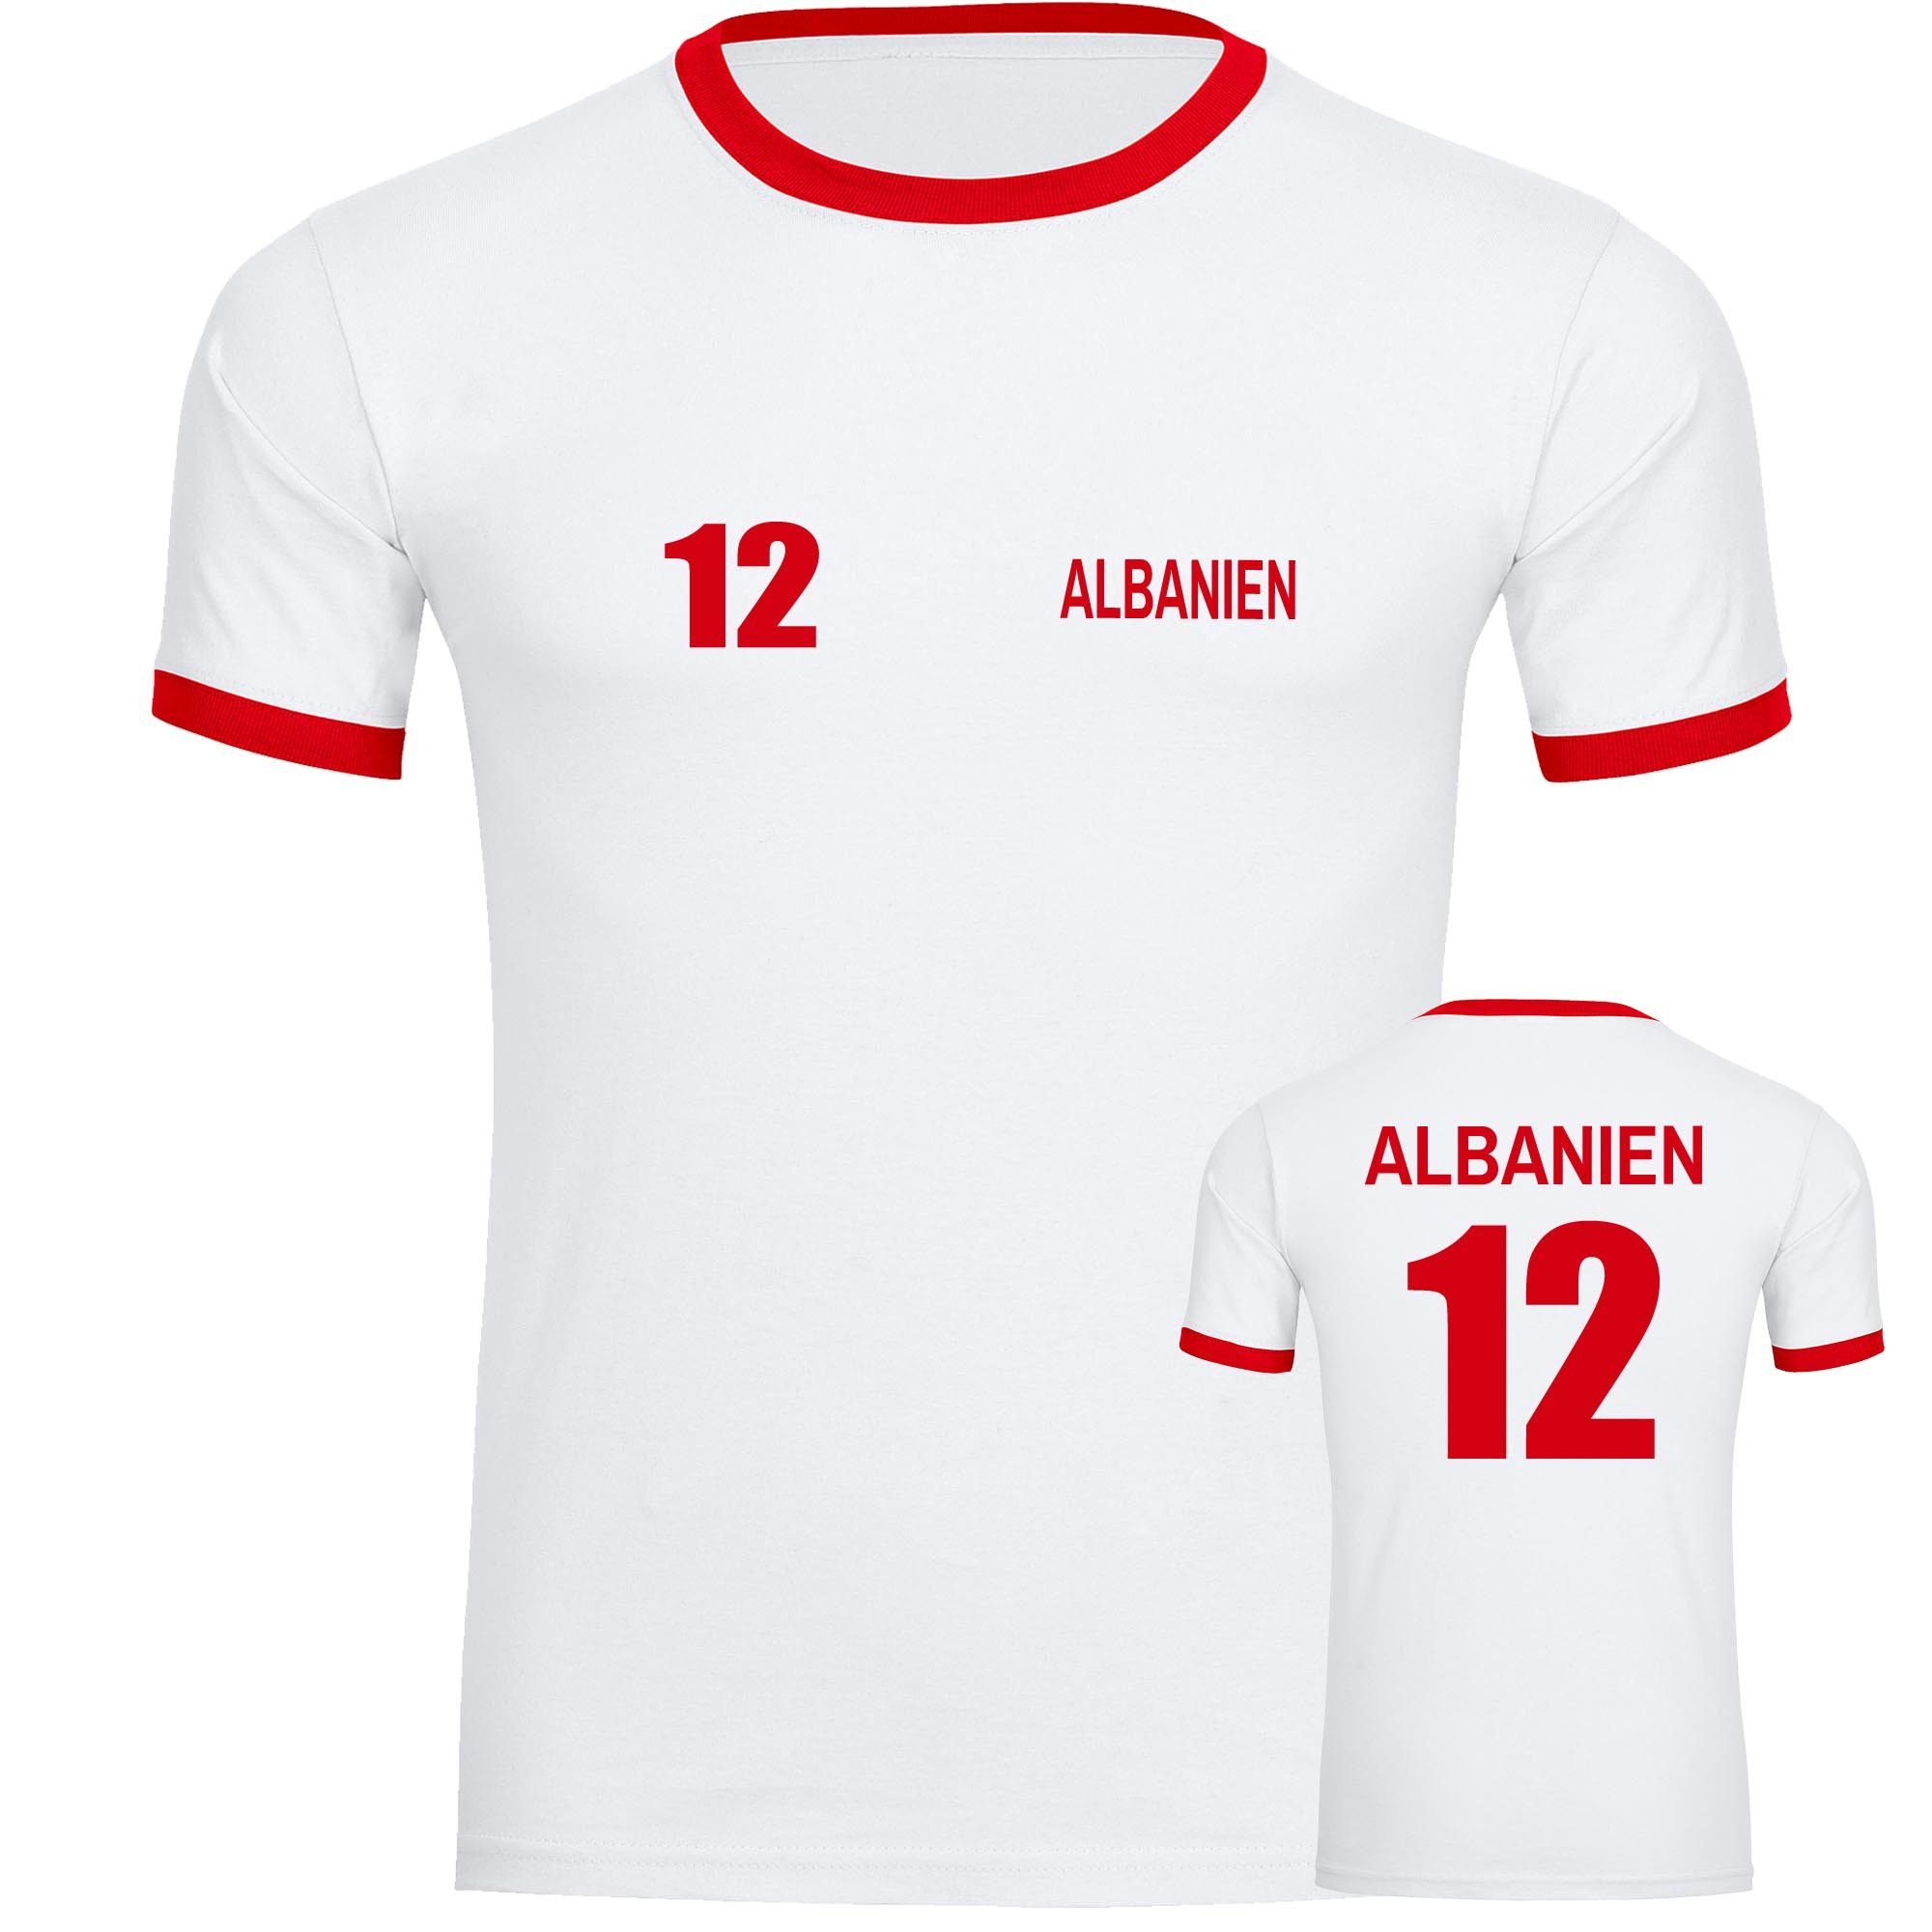 multifanshop T-Shirt Kontrast Albanien - Trikot 12 - Männer